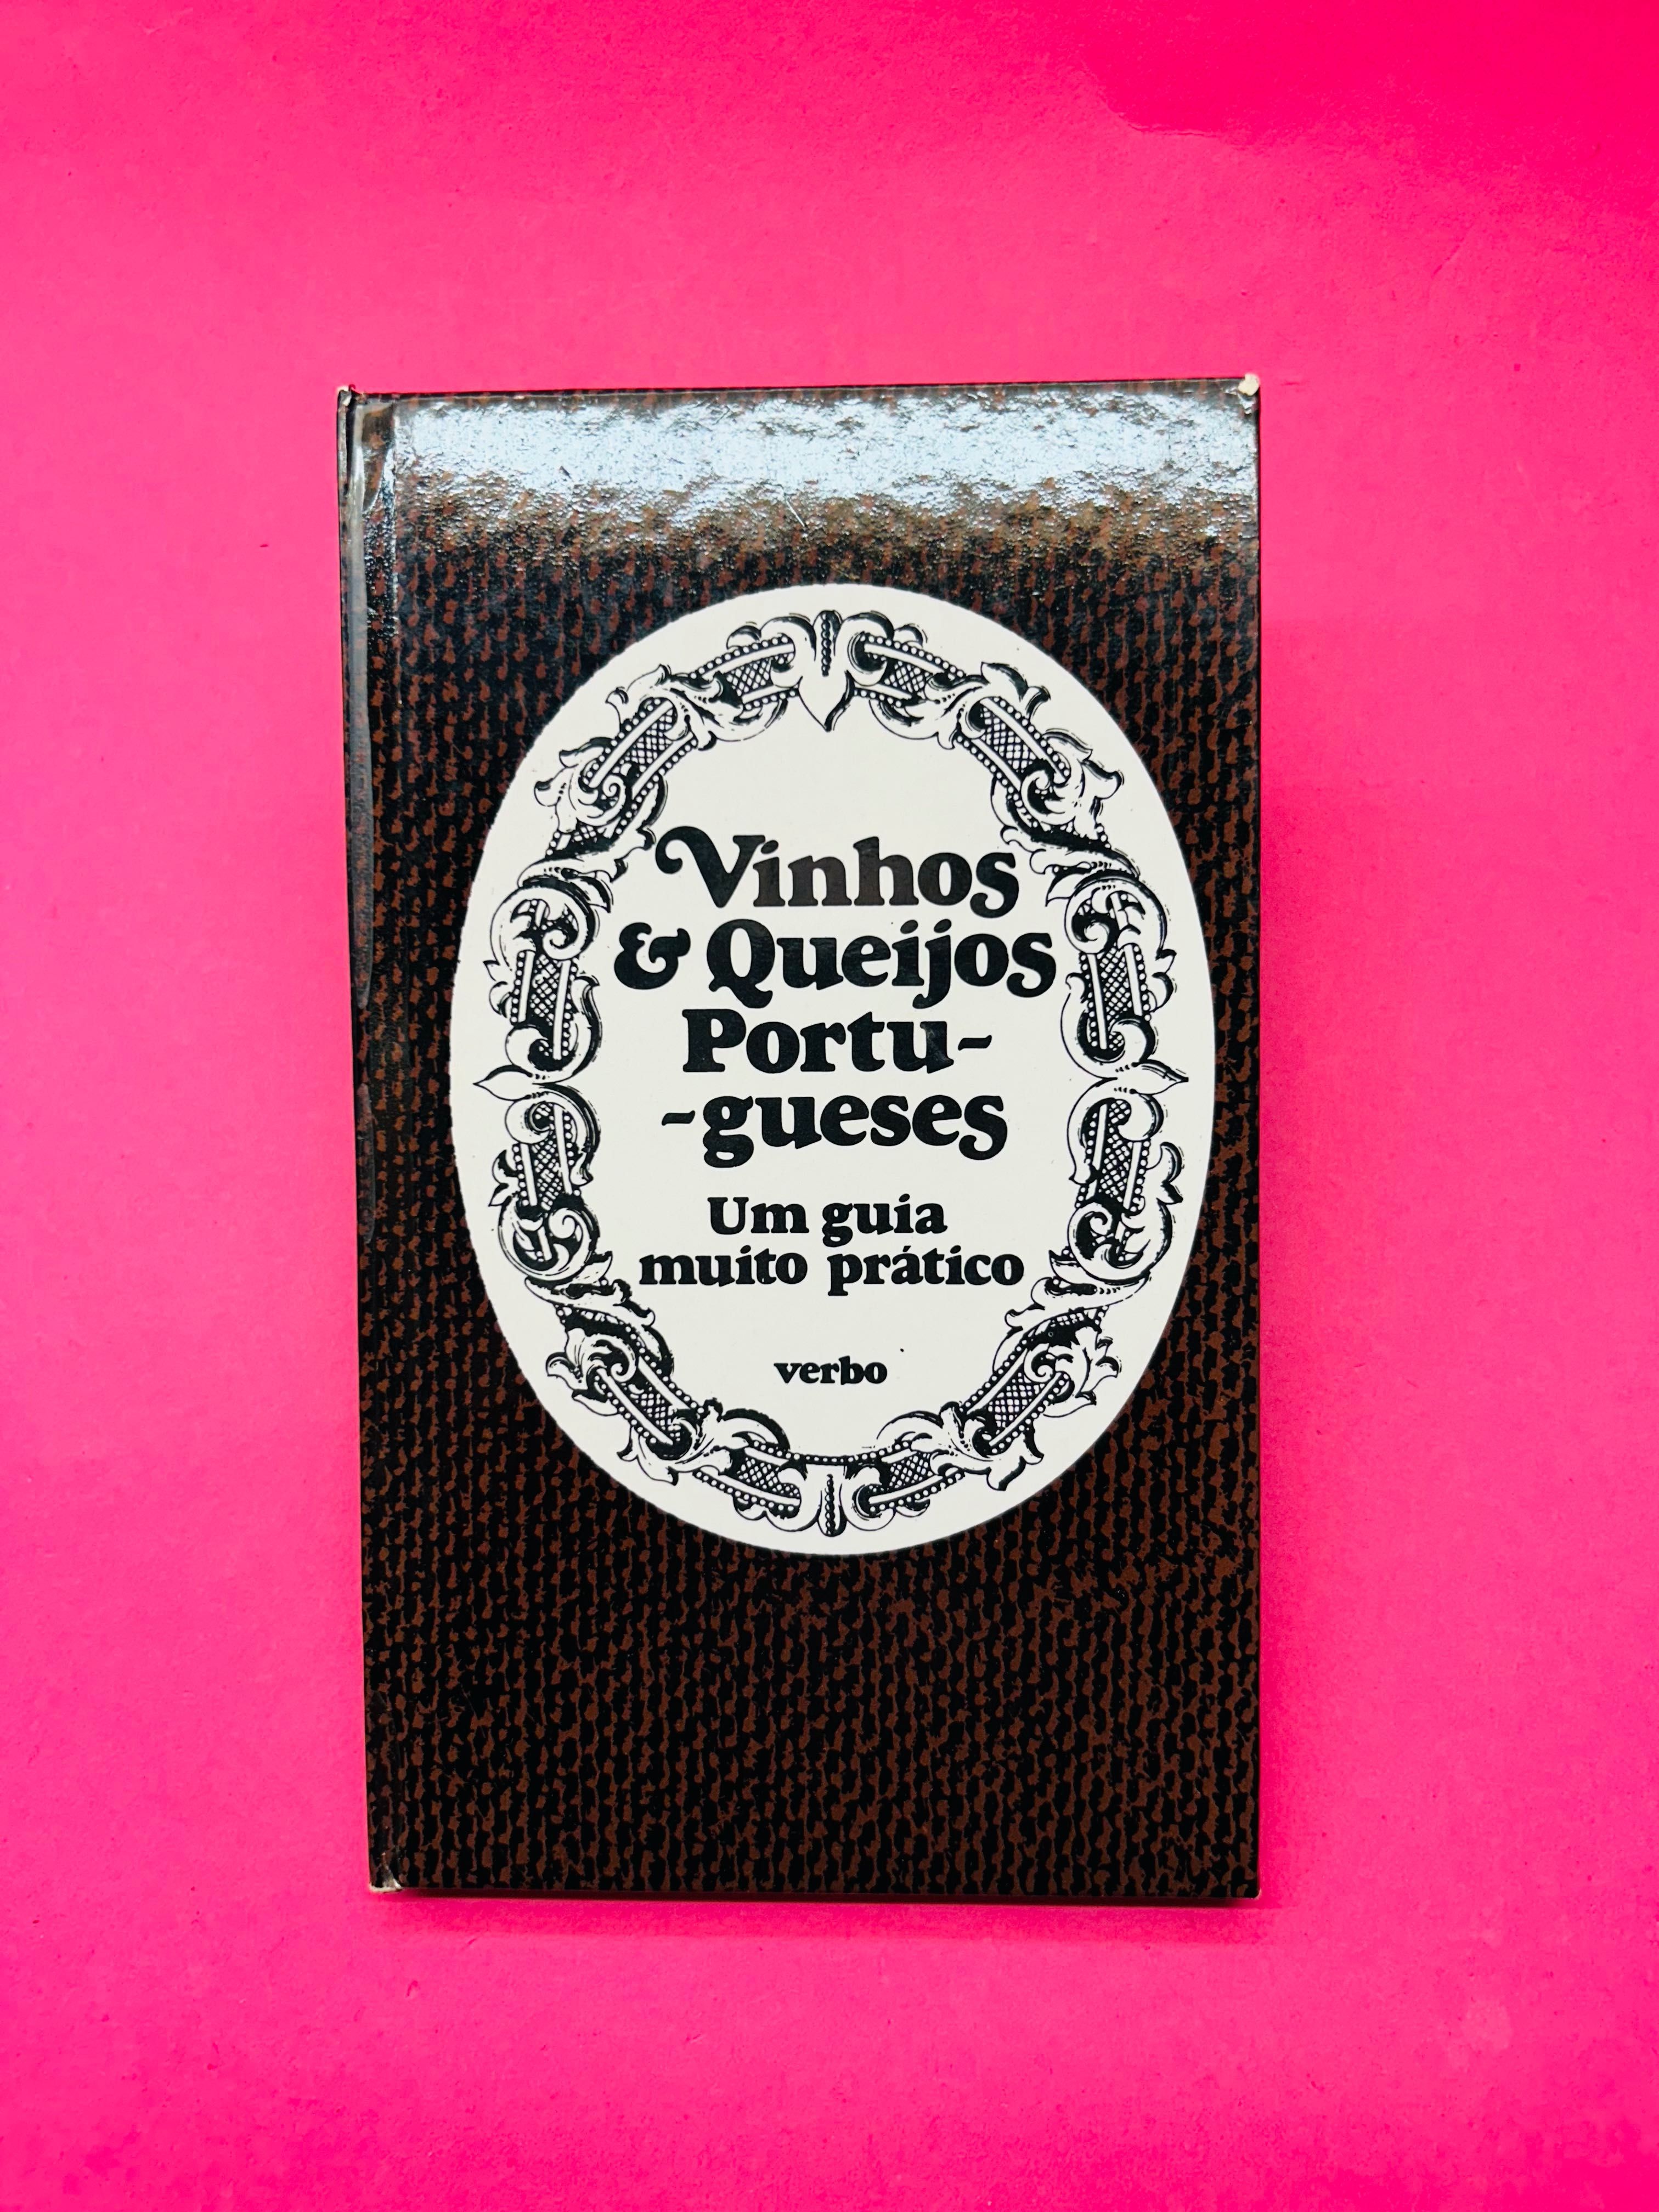 Vinhos
& Queijos
Portugueses